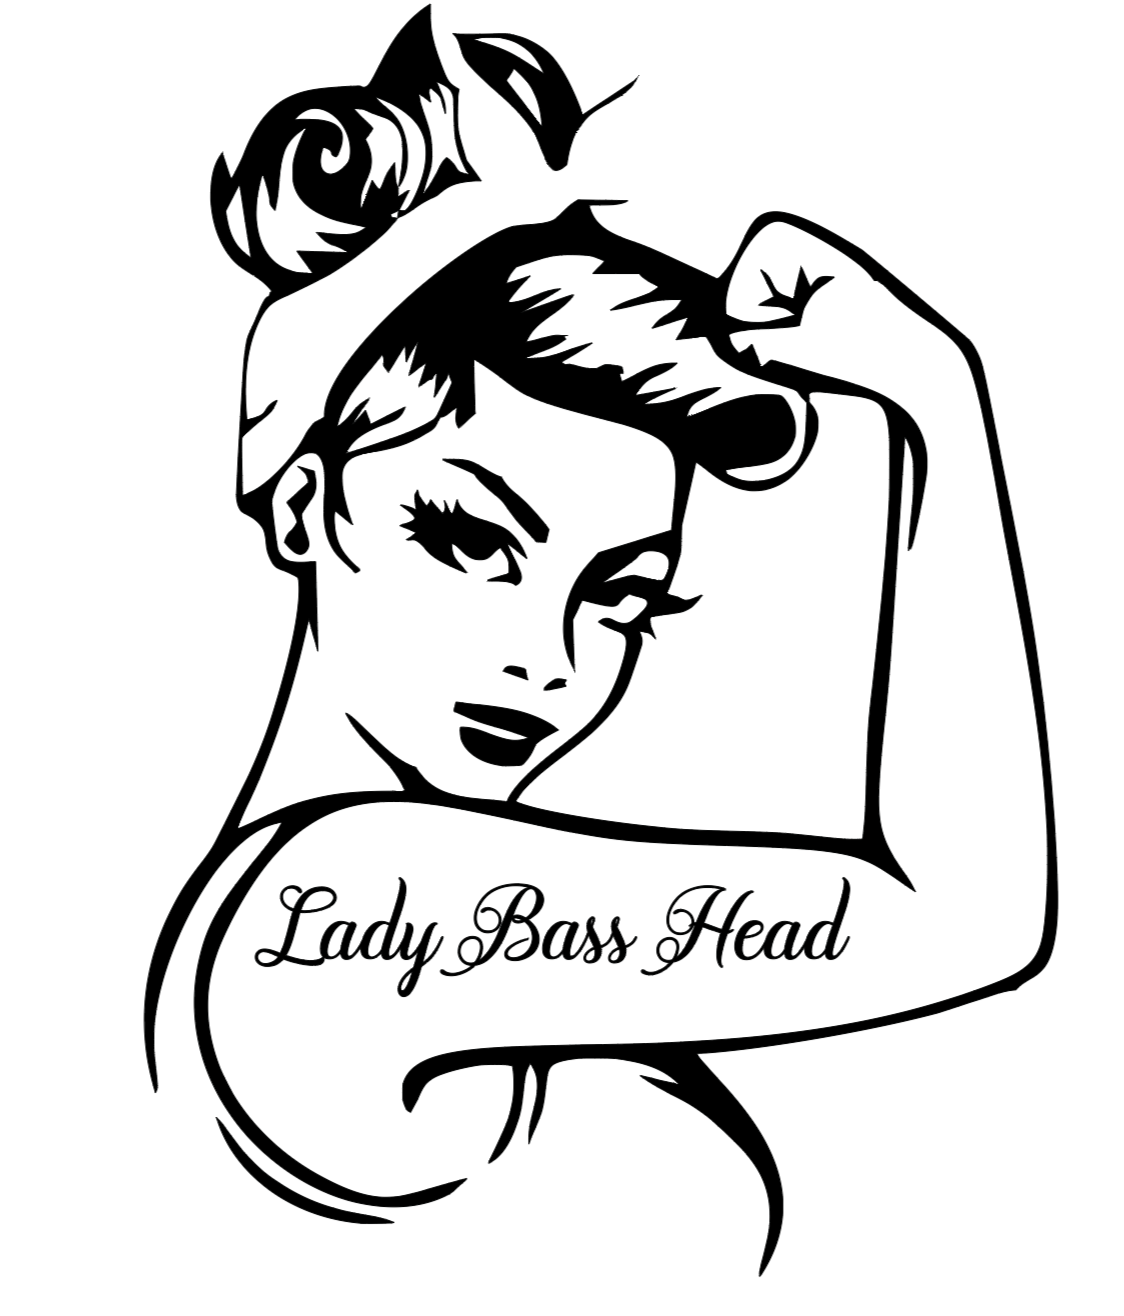 Lady Bass Head